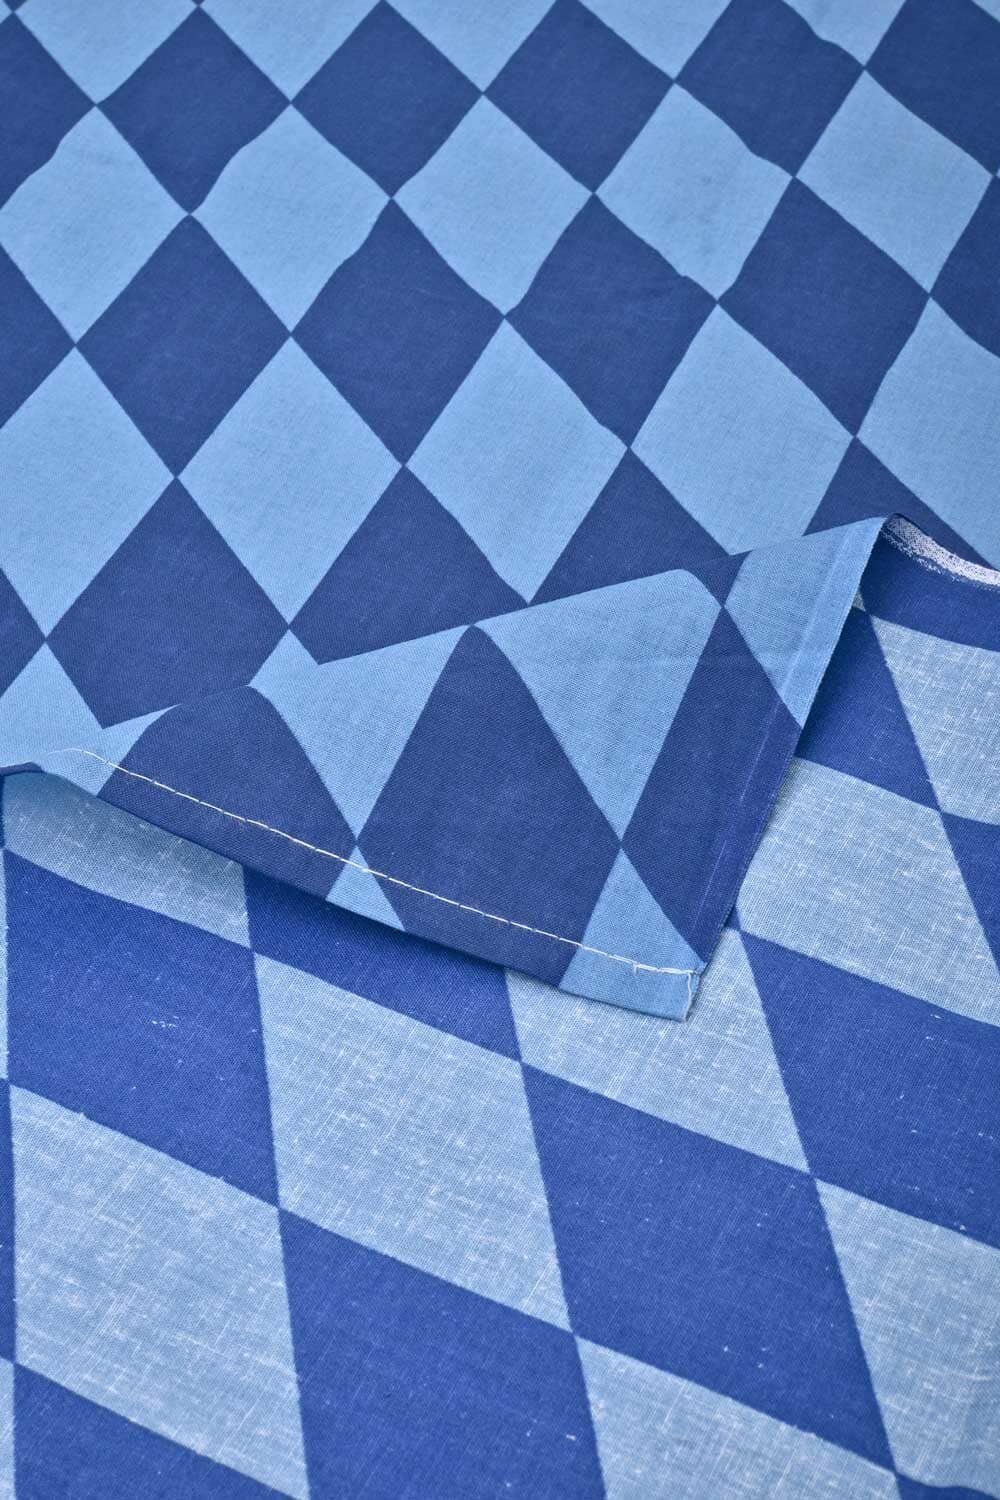 Polo Republica Tiles Printed Premium Collection 3 Piece Double Bed Sheet Bed Sheet Fiza 